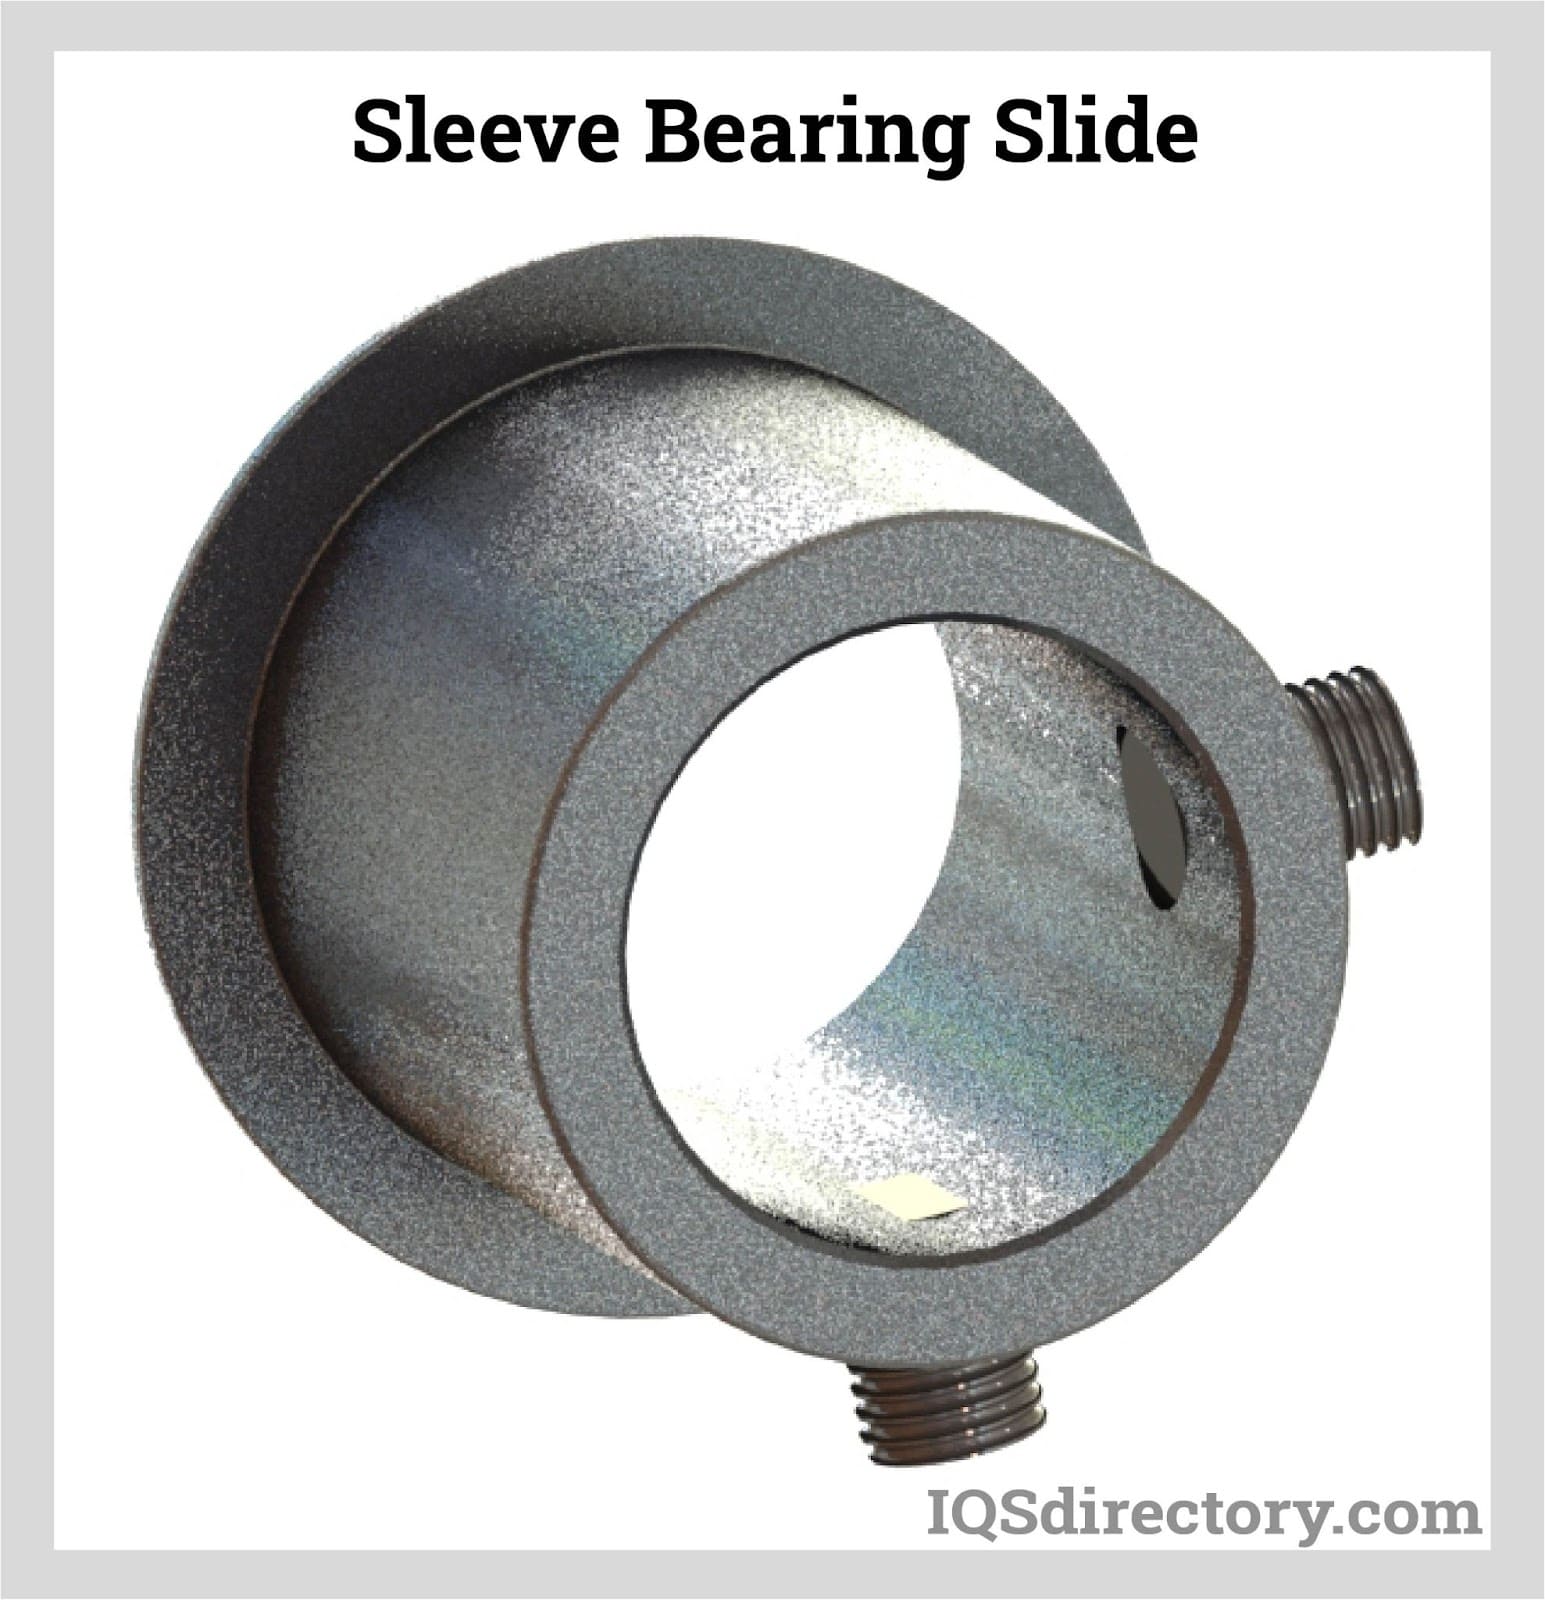 Sleeve Bearing Slide